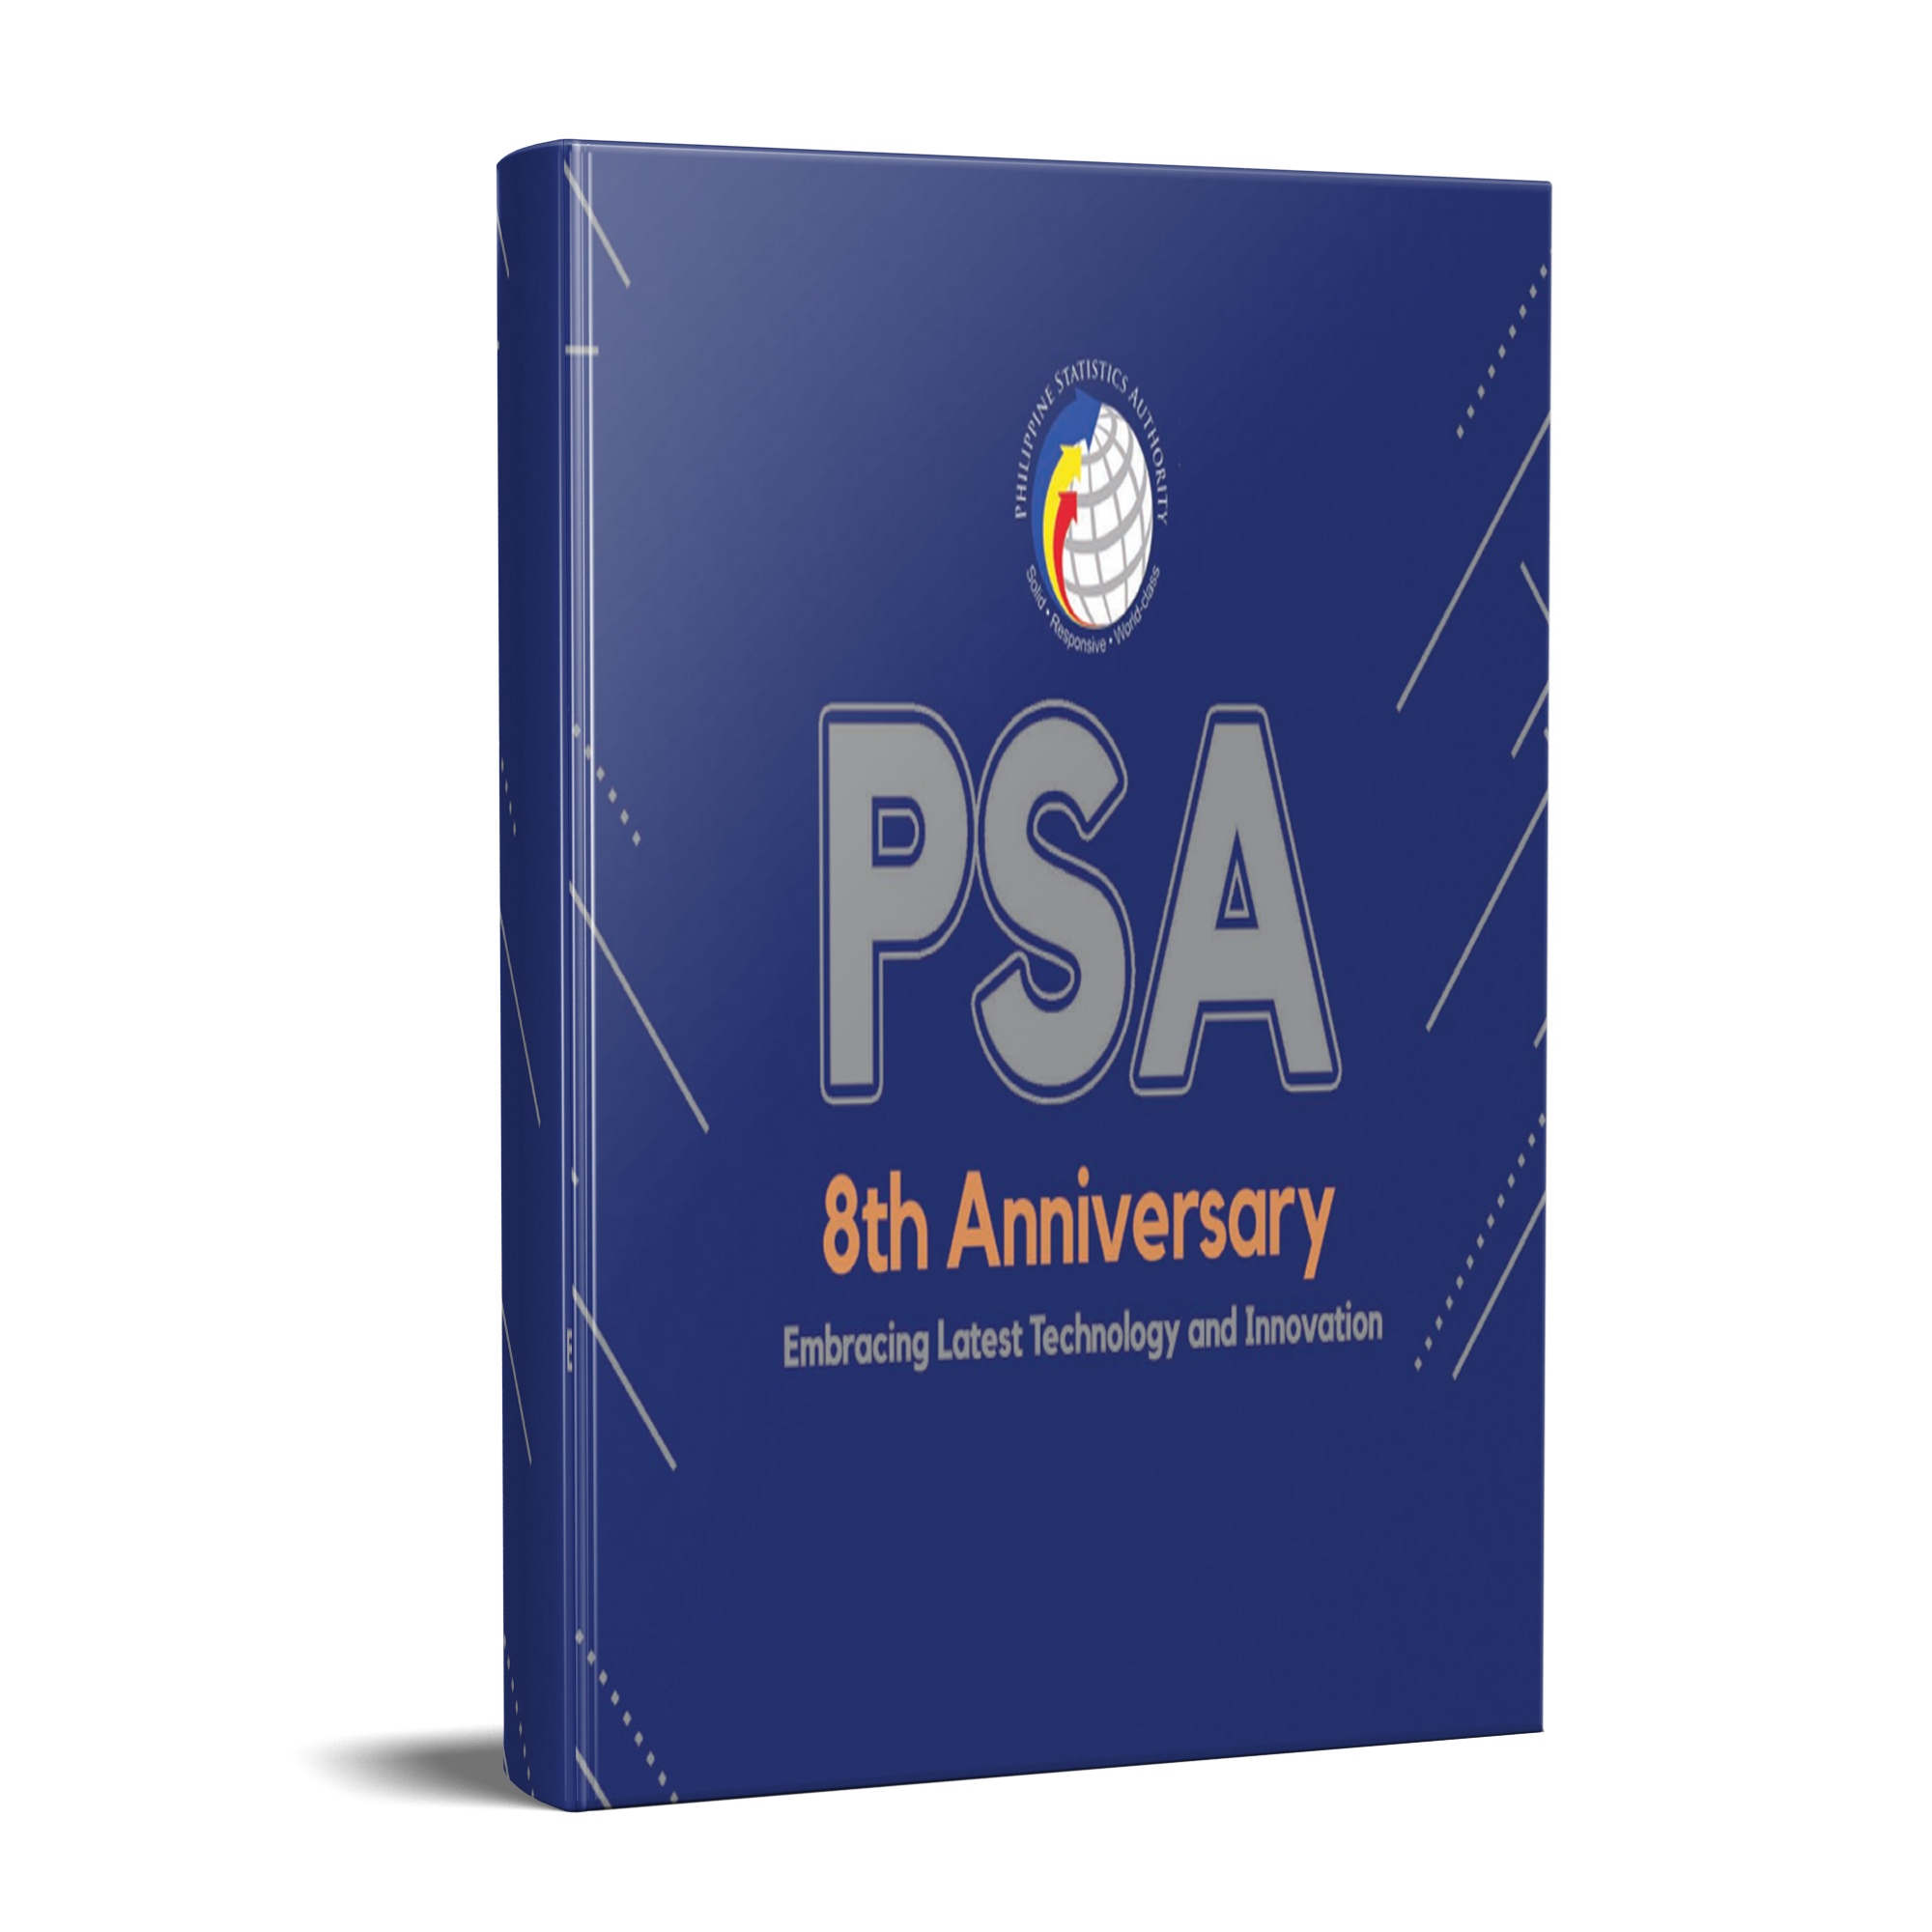 PSA Security | Most Progressive Systems Integrator Consortium